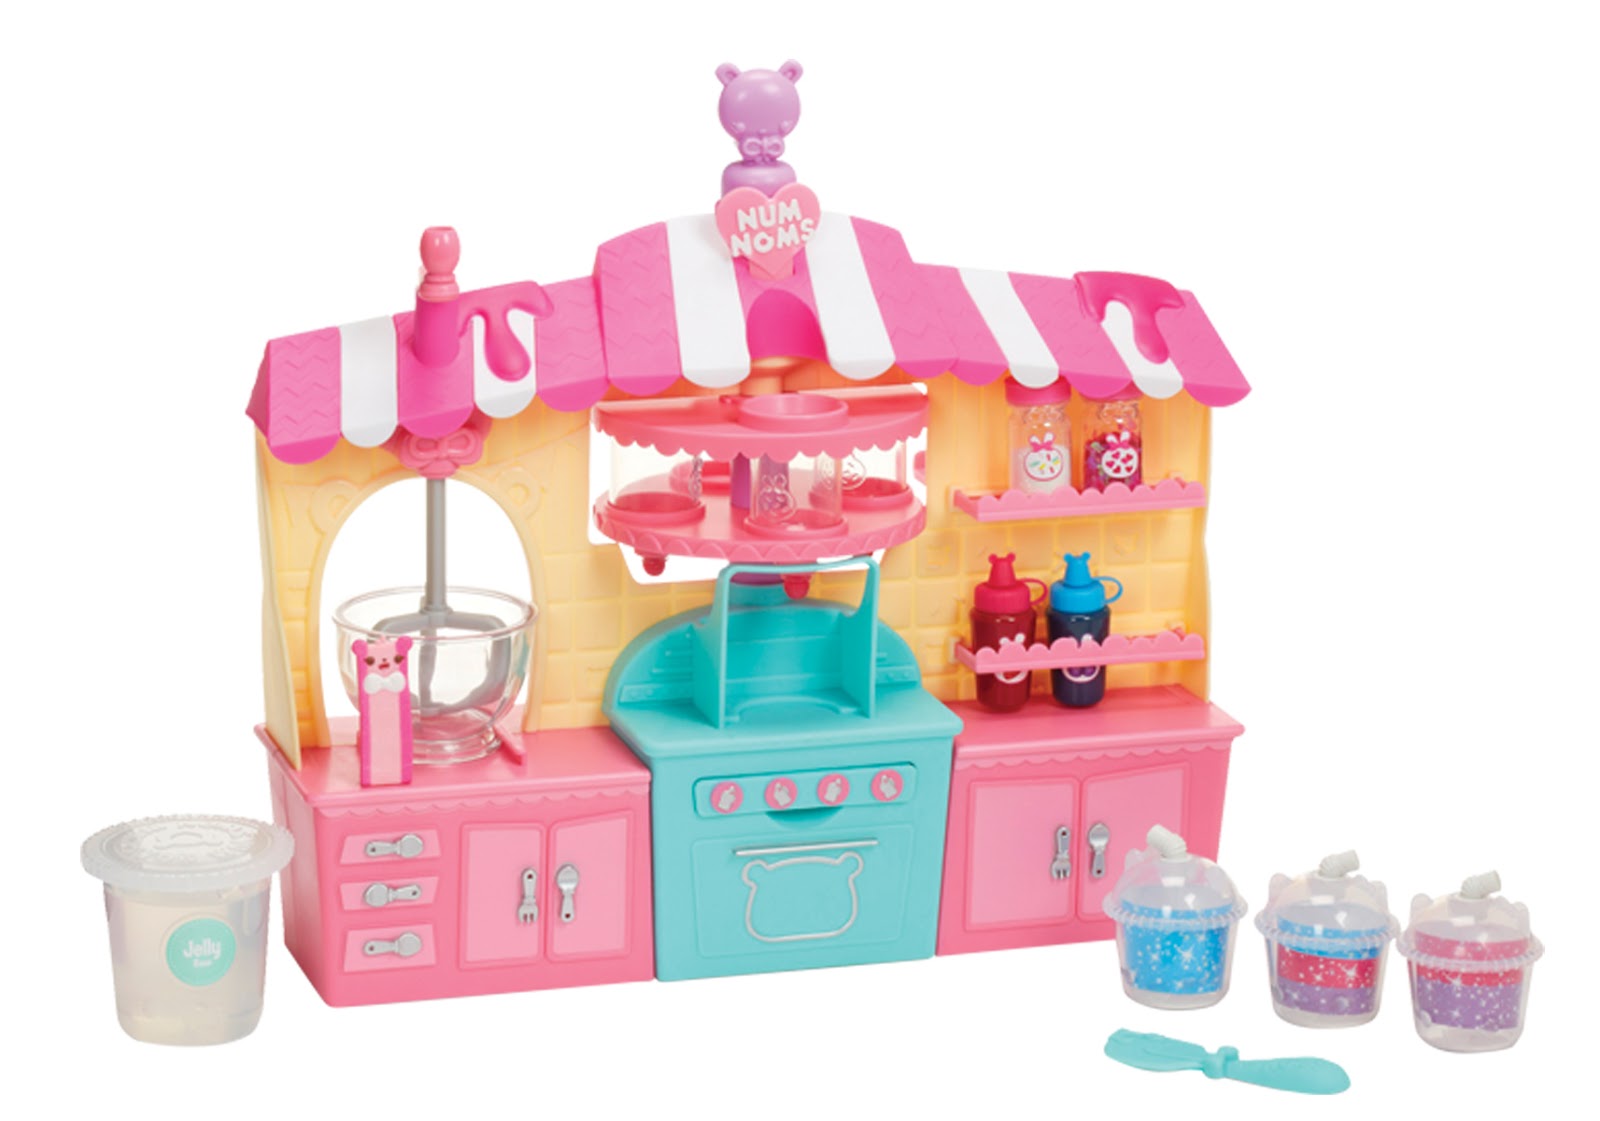 toy kingdom toys for girls